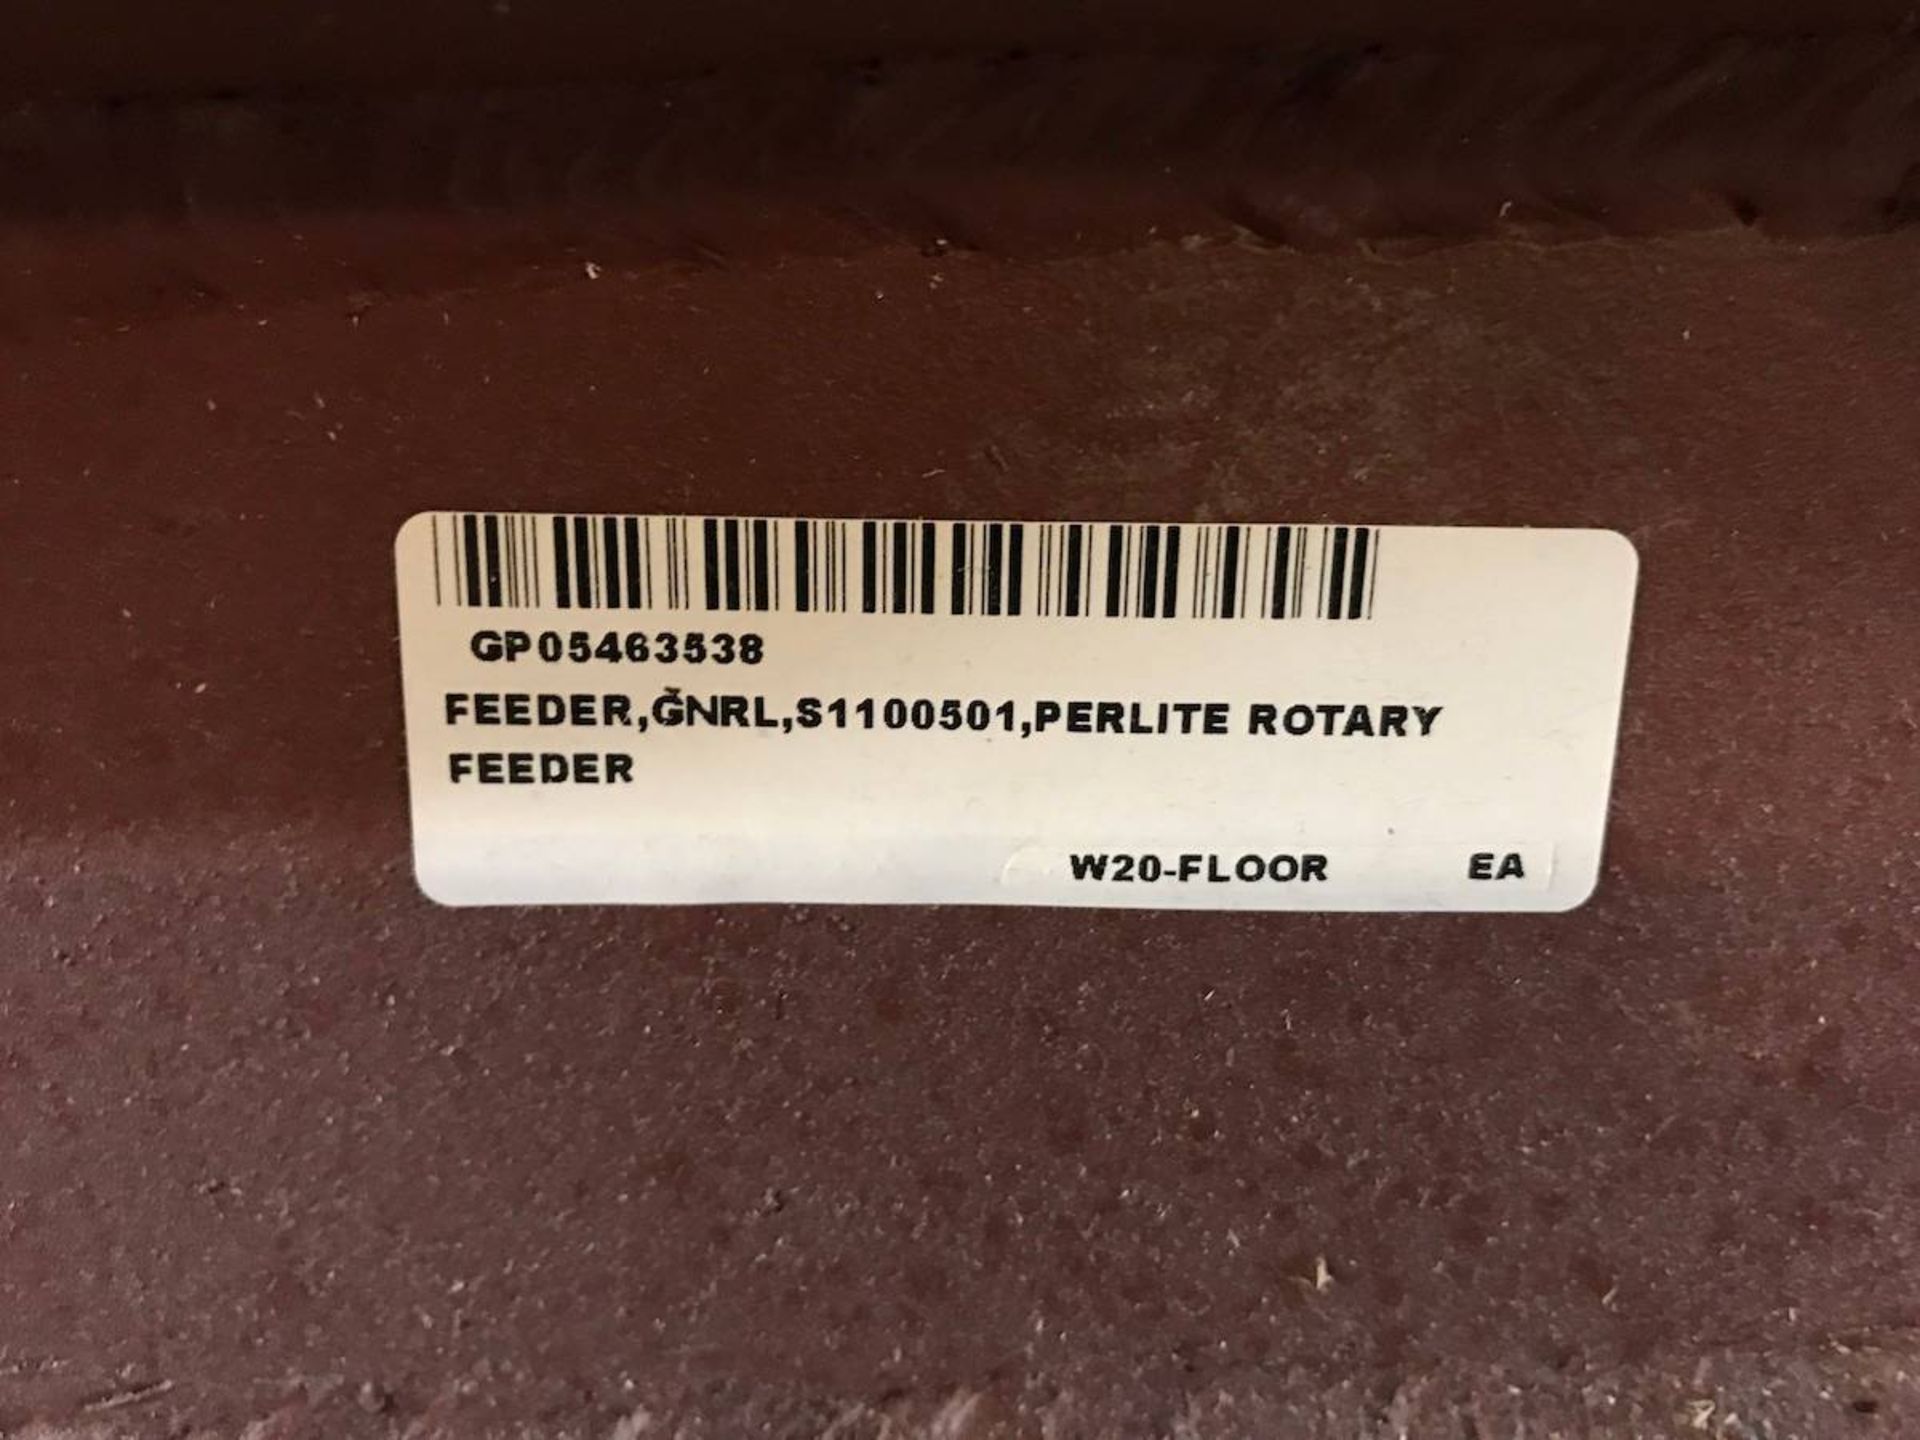 Perlite Rotary Feeder - Image 2 of 2